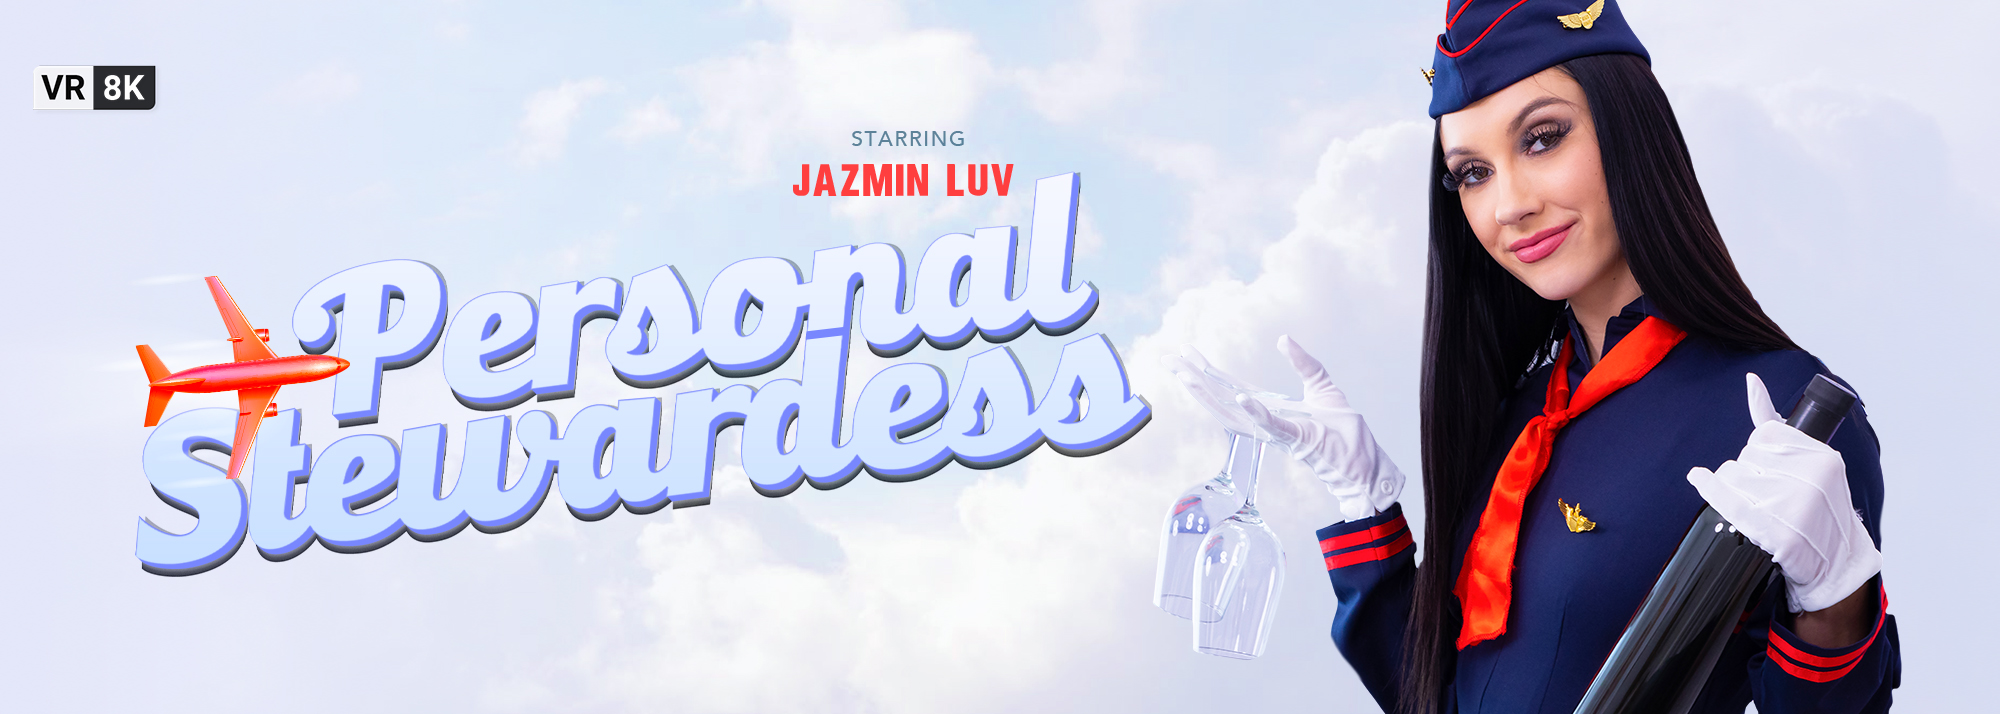 Personal Stewardess - VR Porn Video, Starring Jazmin Luv VR